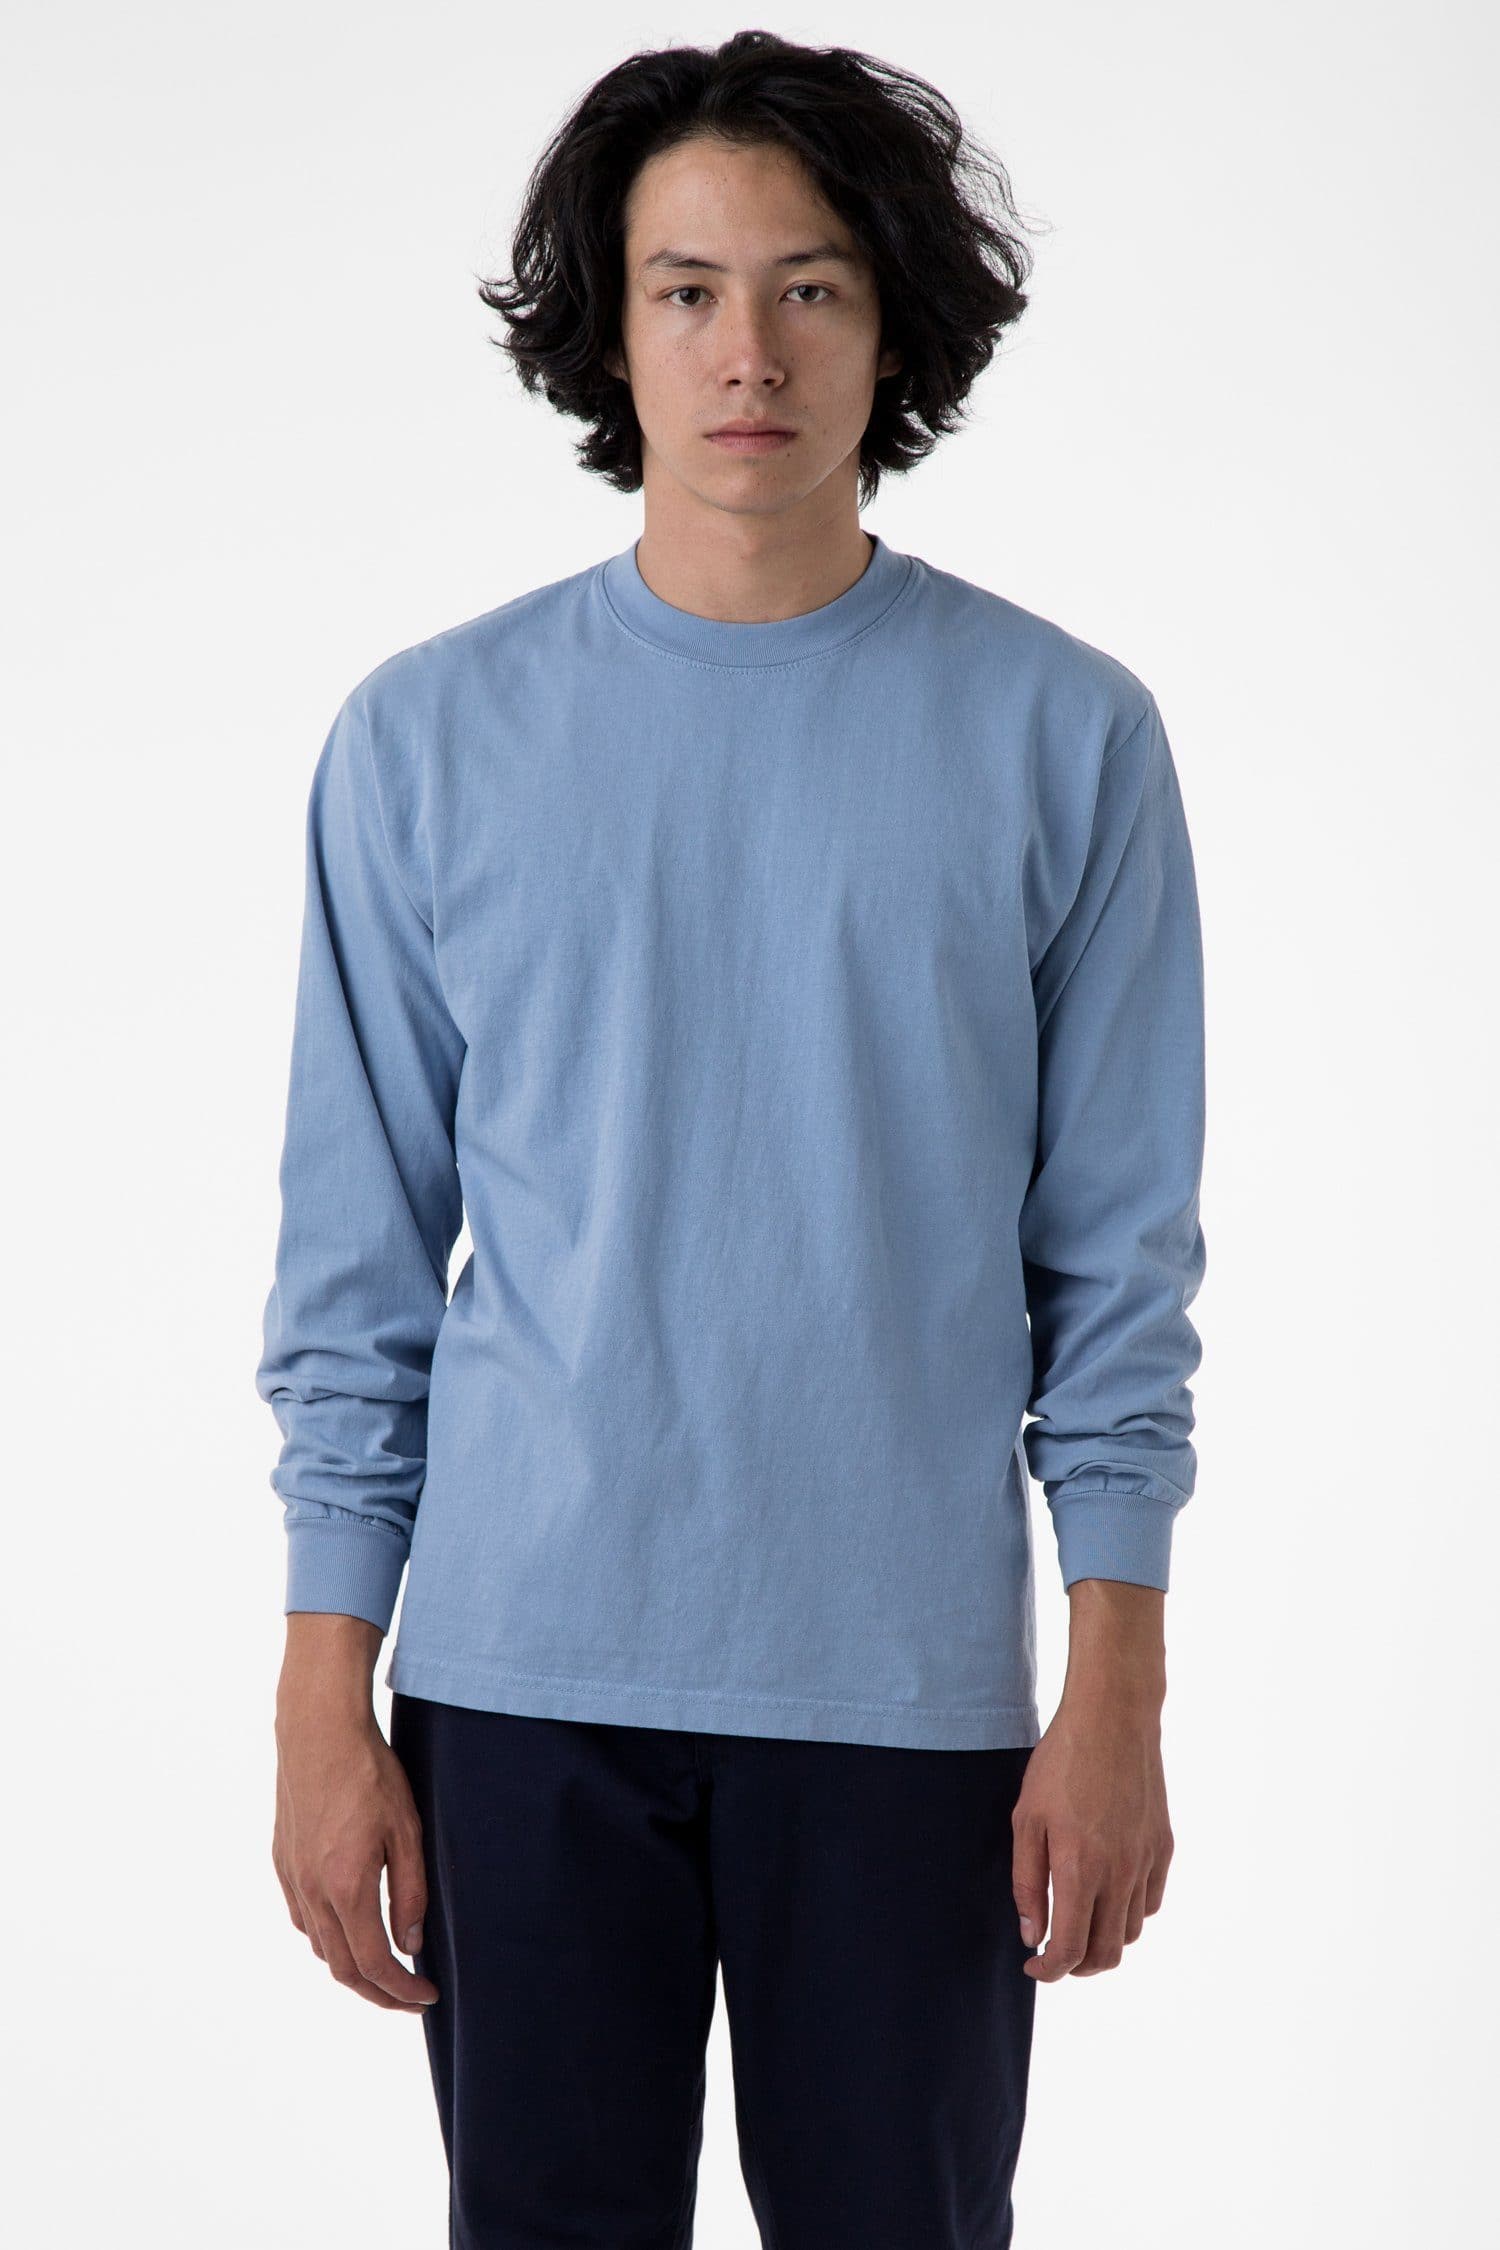 Los Angeles Sky - Sleeve Sportswear Crew 6.5oz – Garment -1807GD Dye Long Apparel Neck